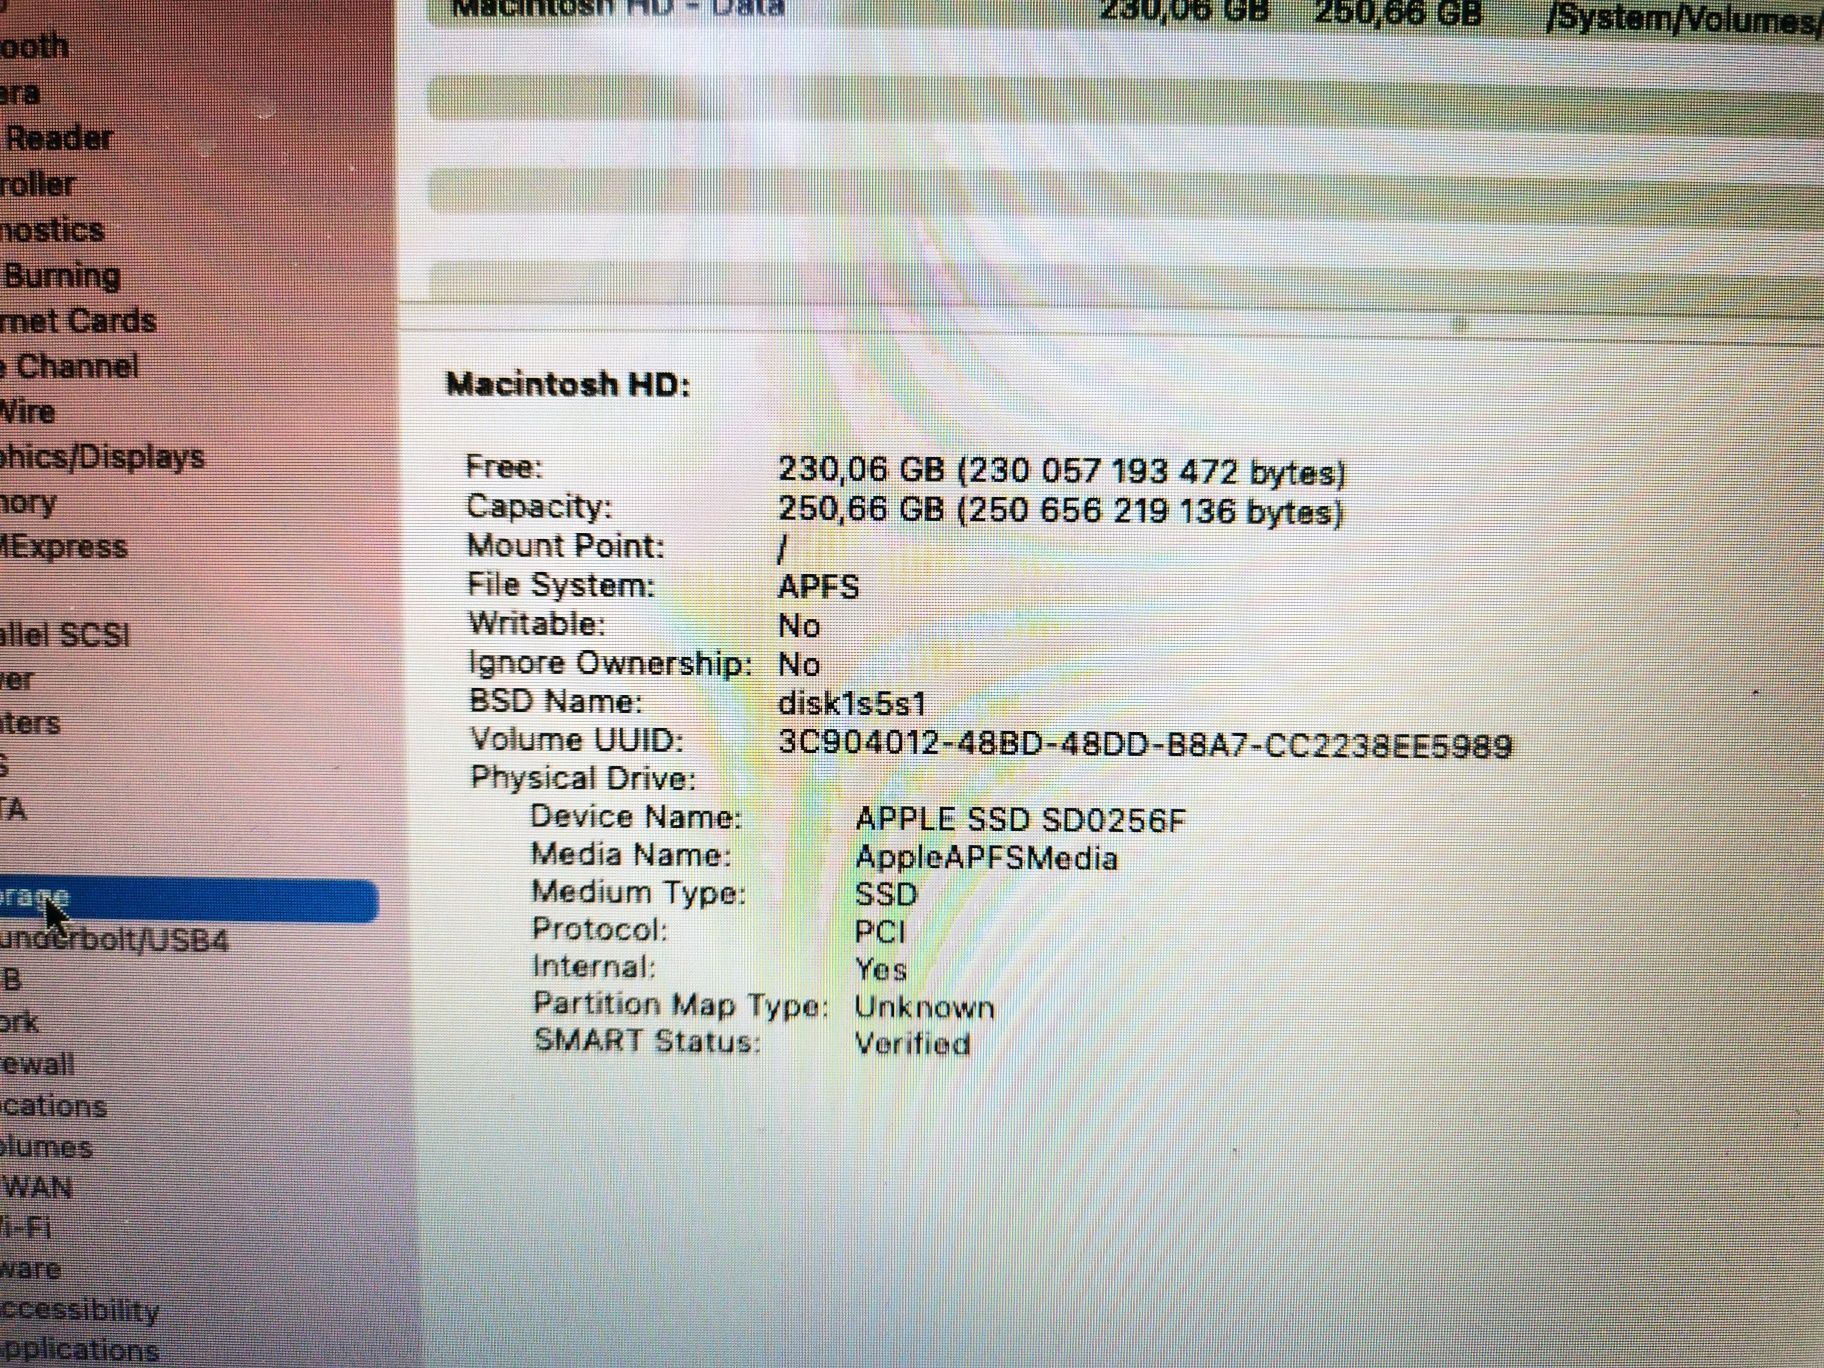 Macbook Air 13.3 Early 2014 i5 256SSD като нов